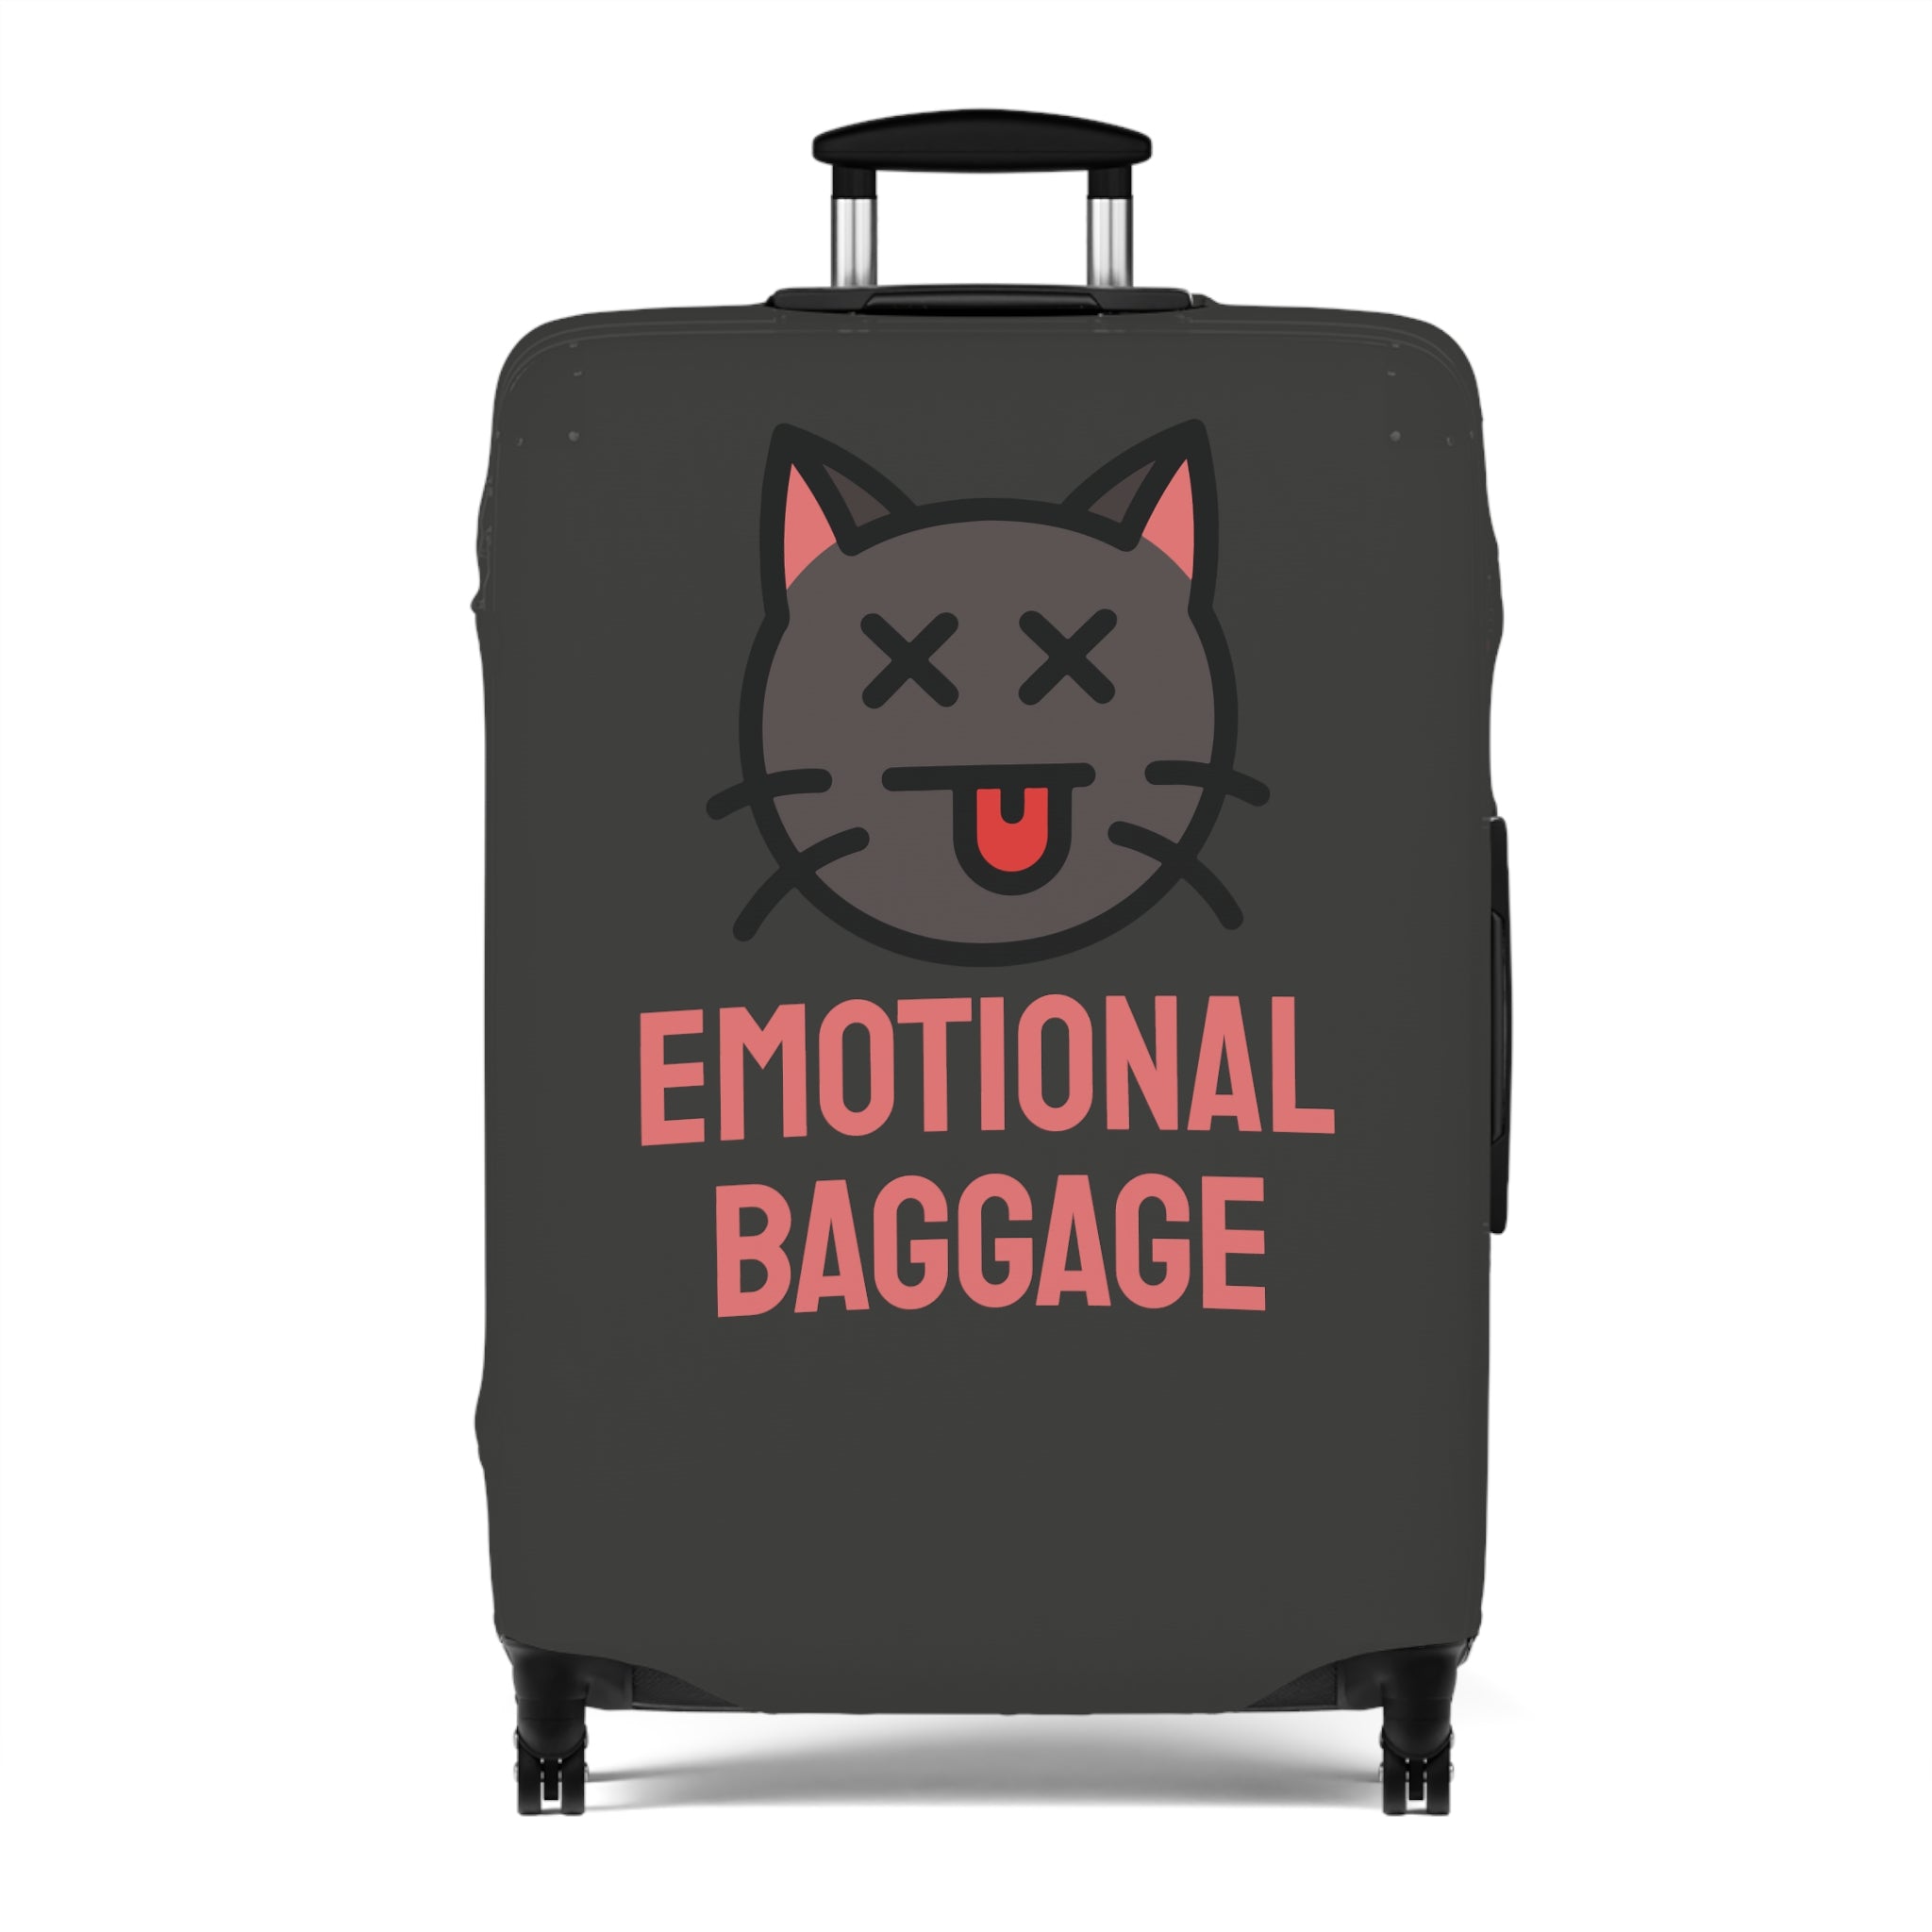 Emotional baggage Luggage Cover (Black)